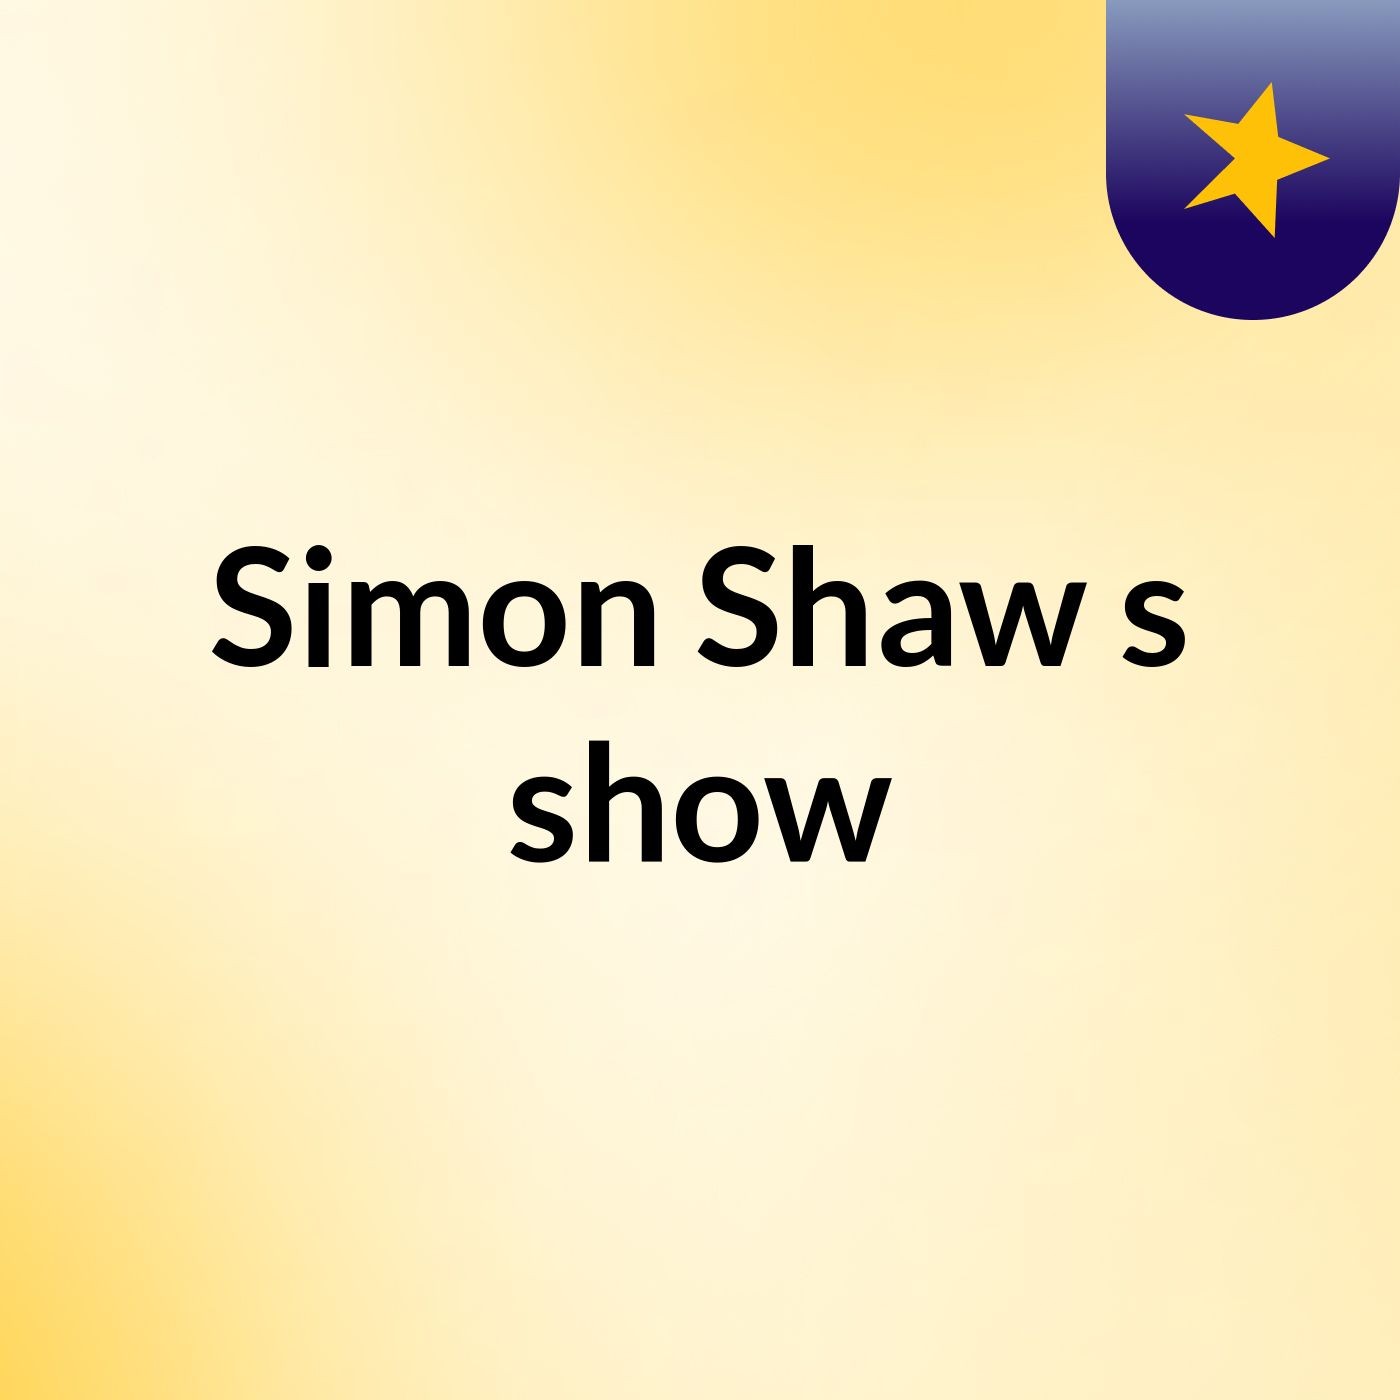 Simon Shaw's show